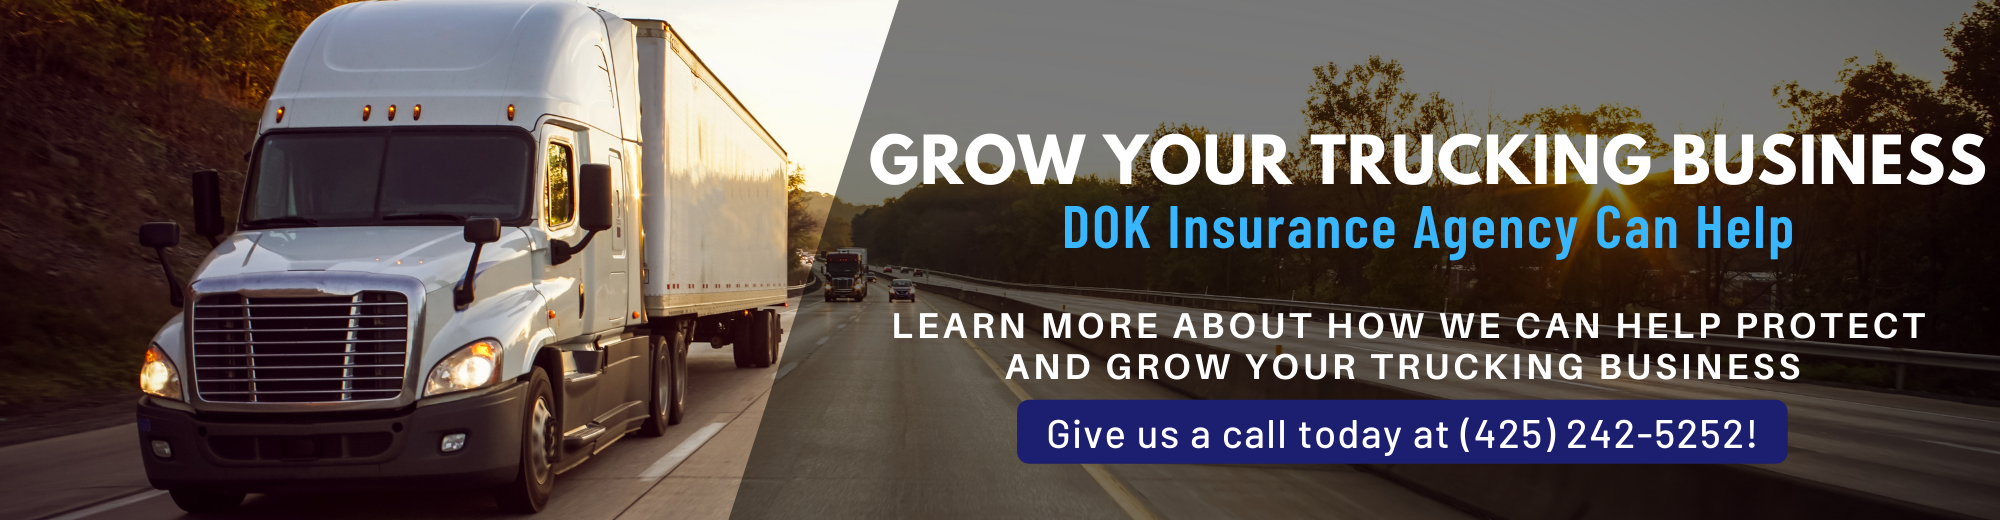 DOK Insurance Agency